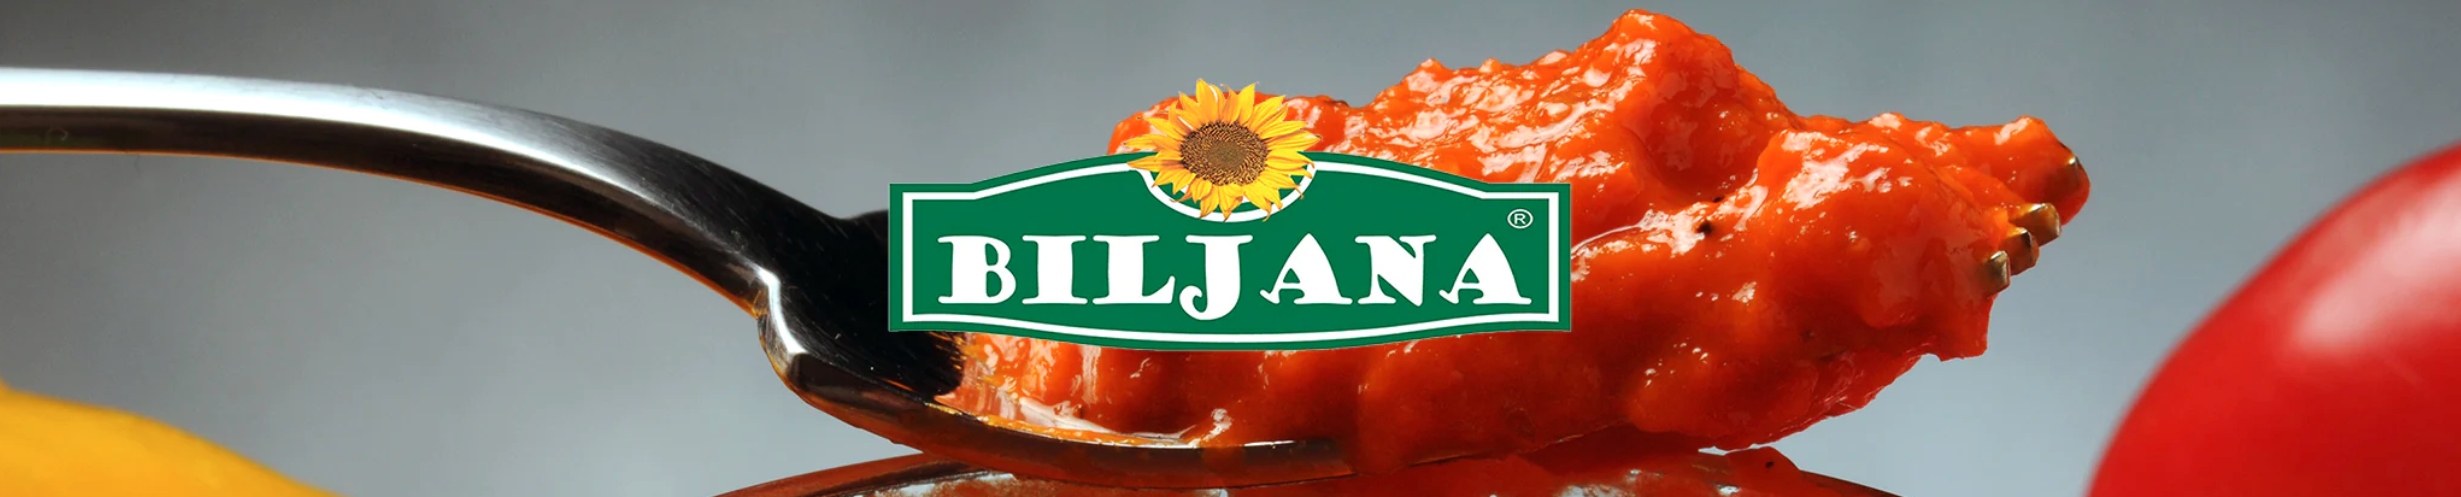 Biljana Ajvar - Global Imports and Exports Wholesale